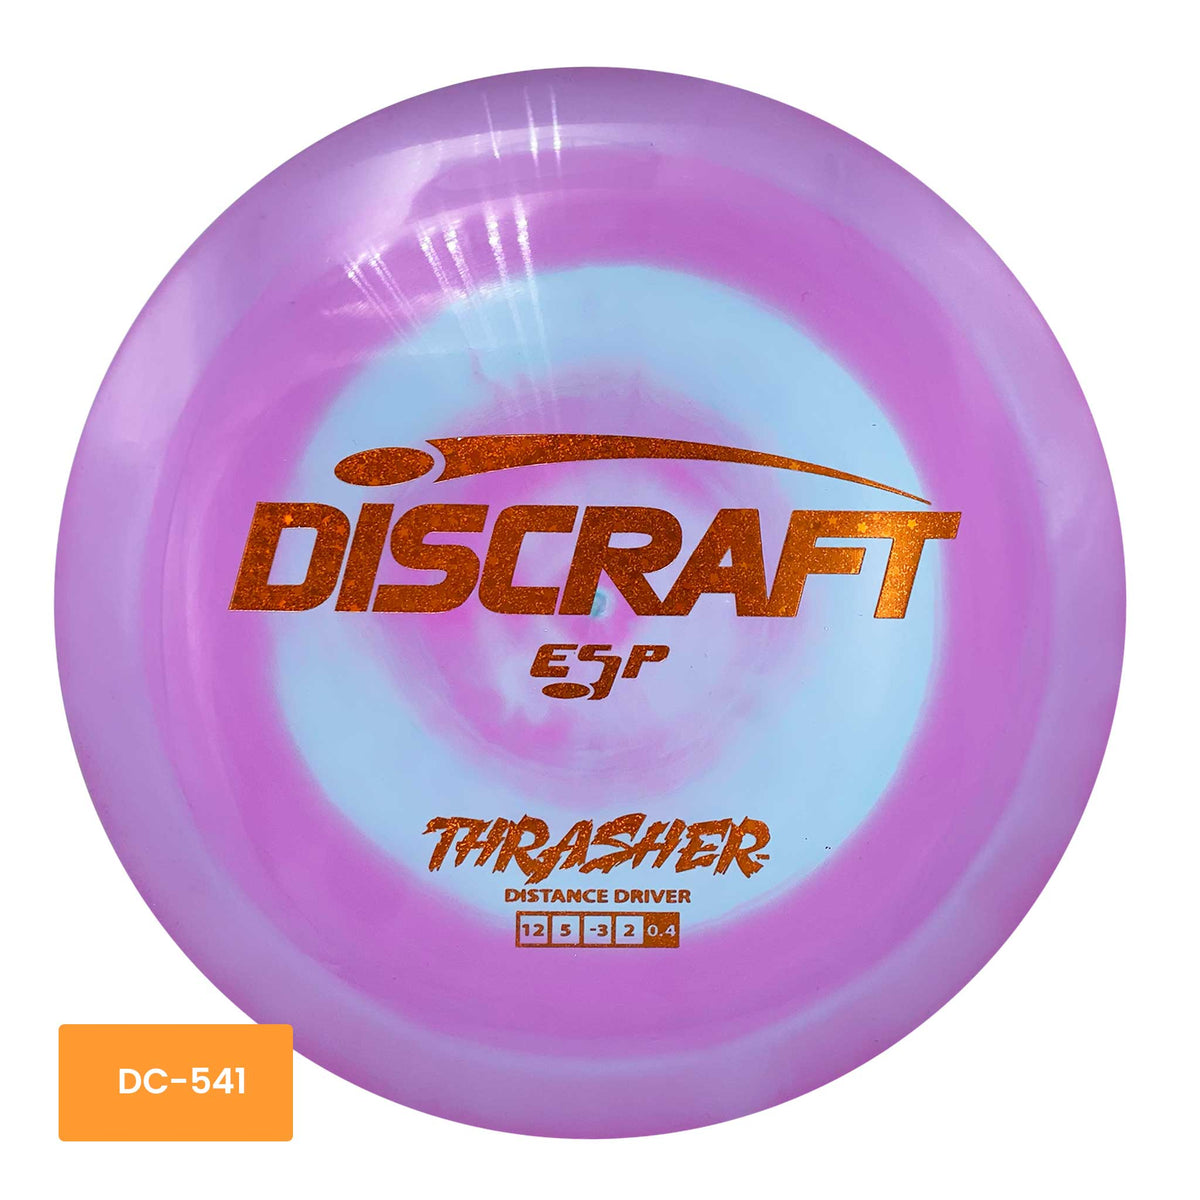 Discraft ESP Thrasher distance driver - Purple